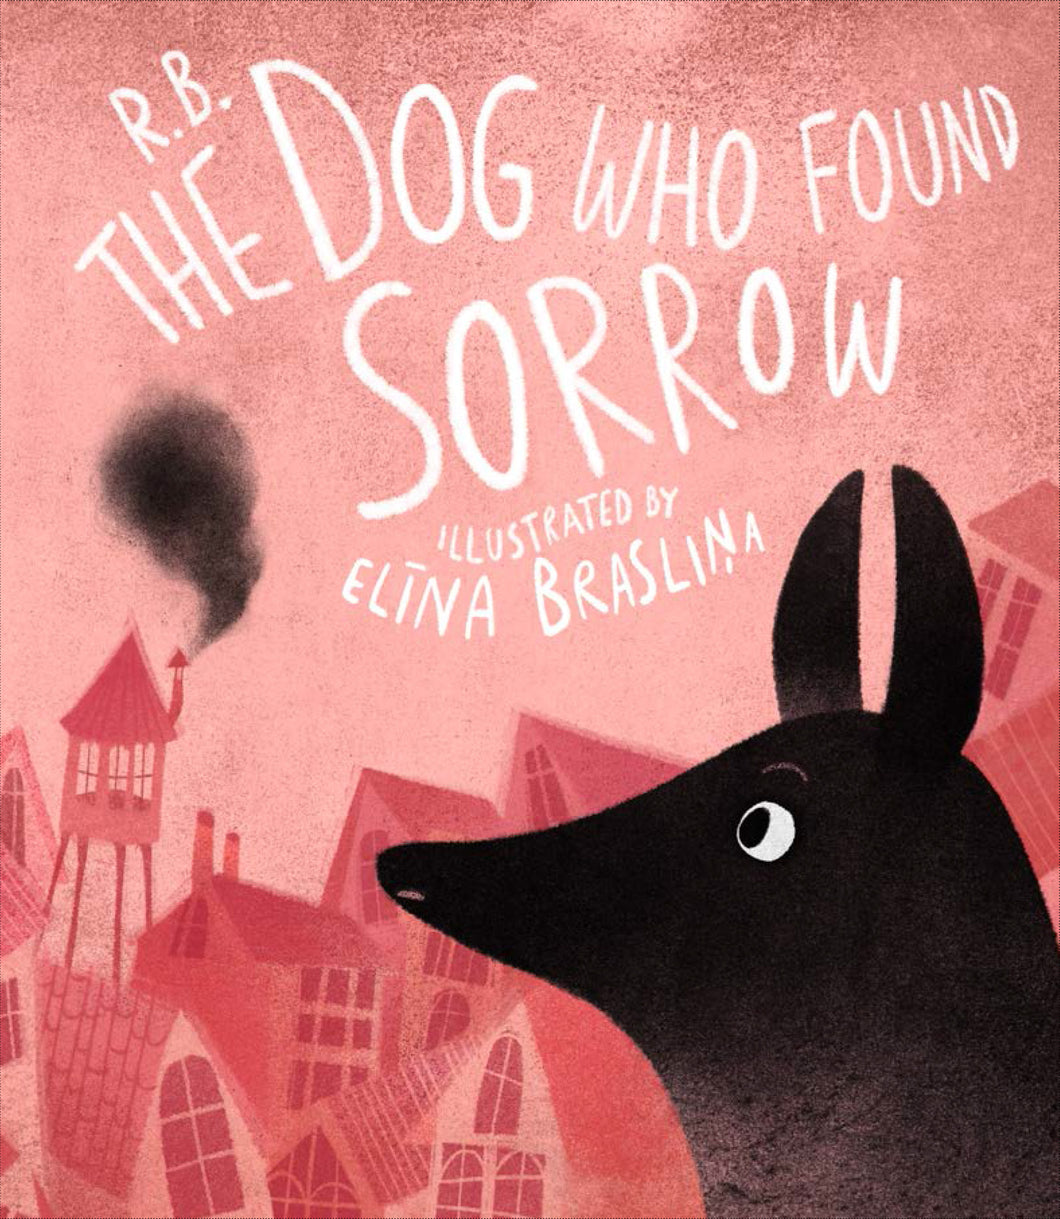 The Dog Who Found Sorrow